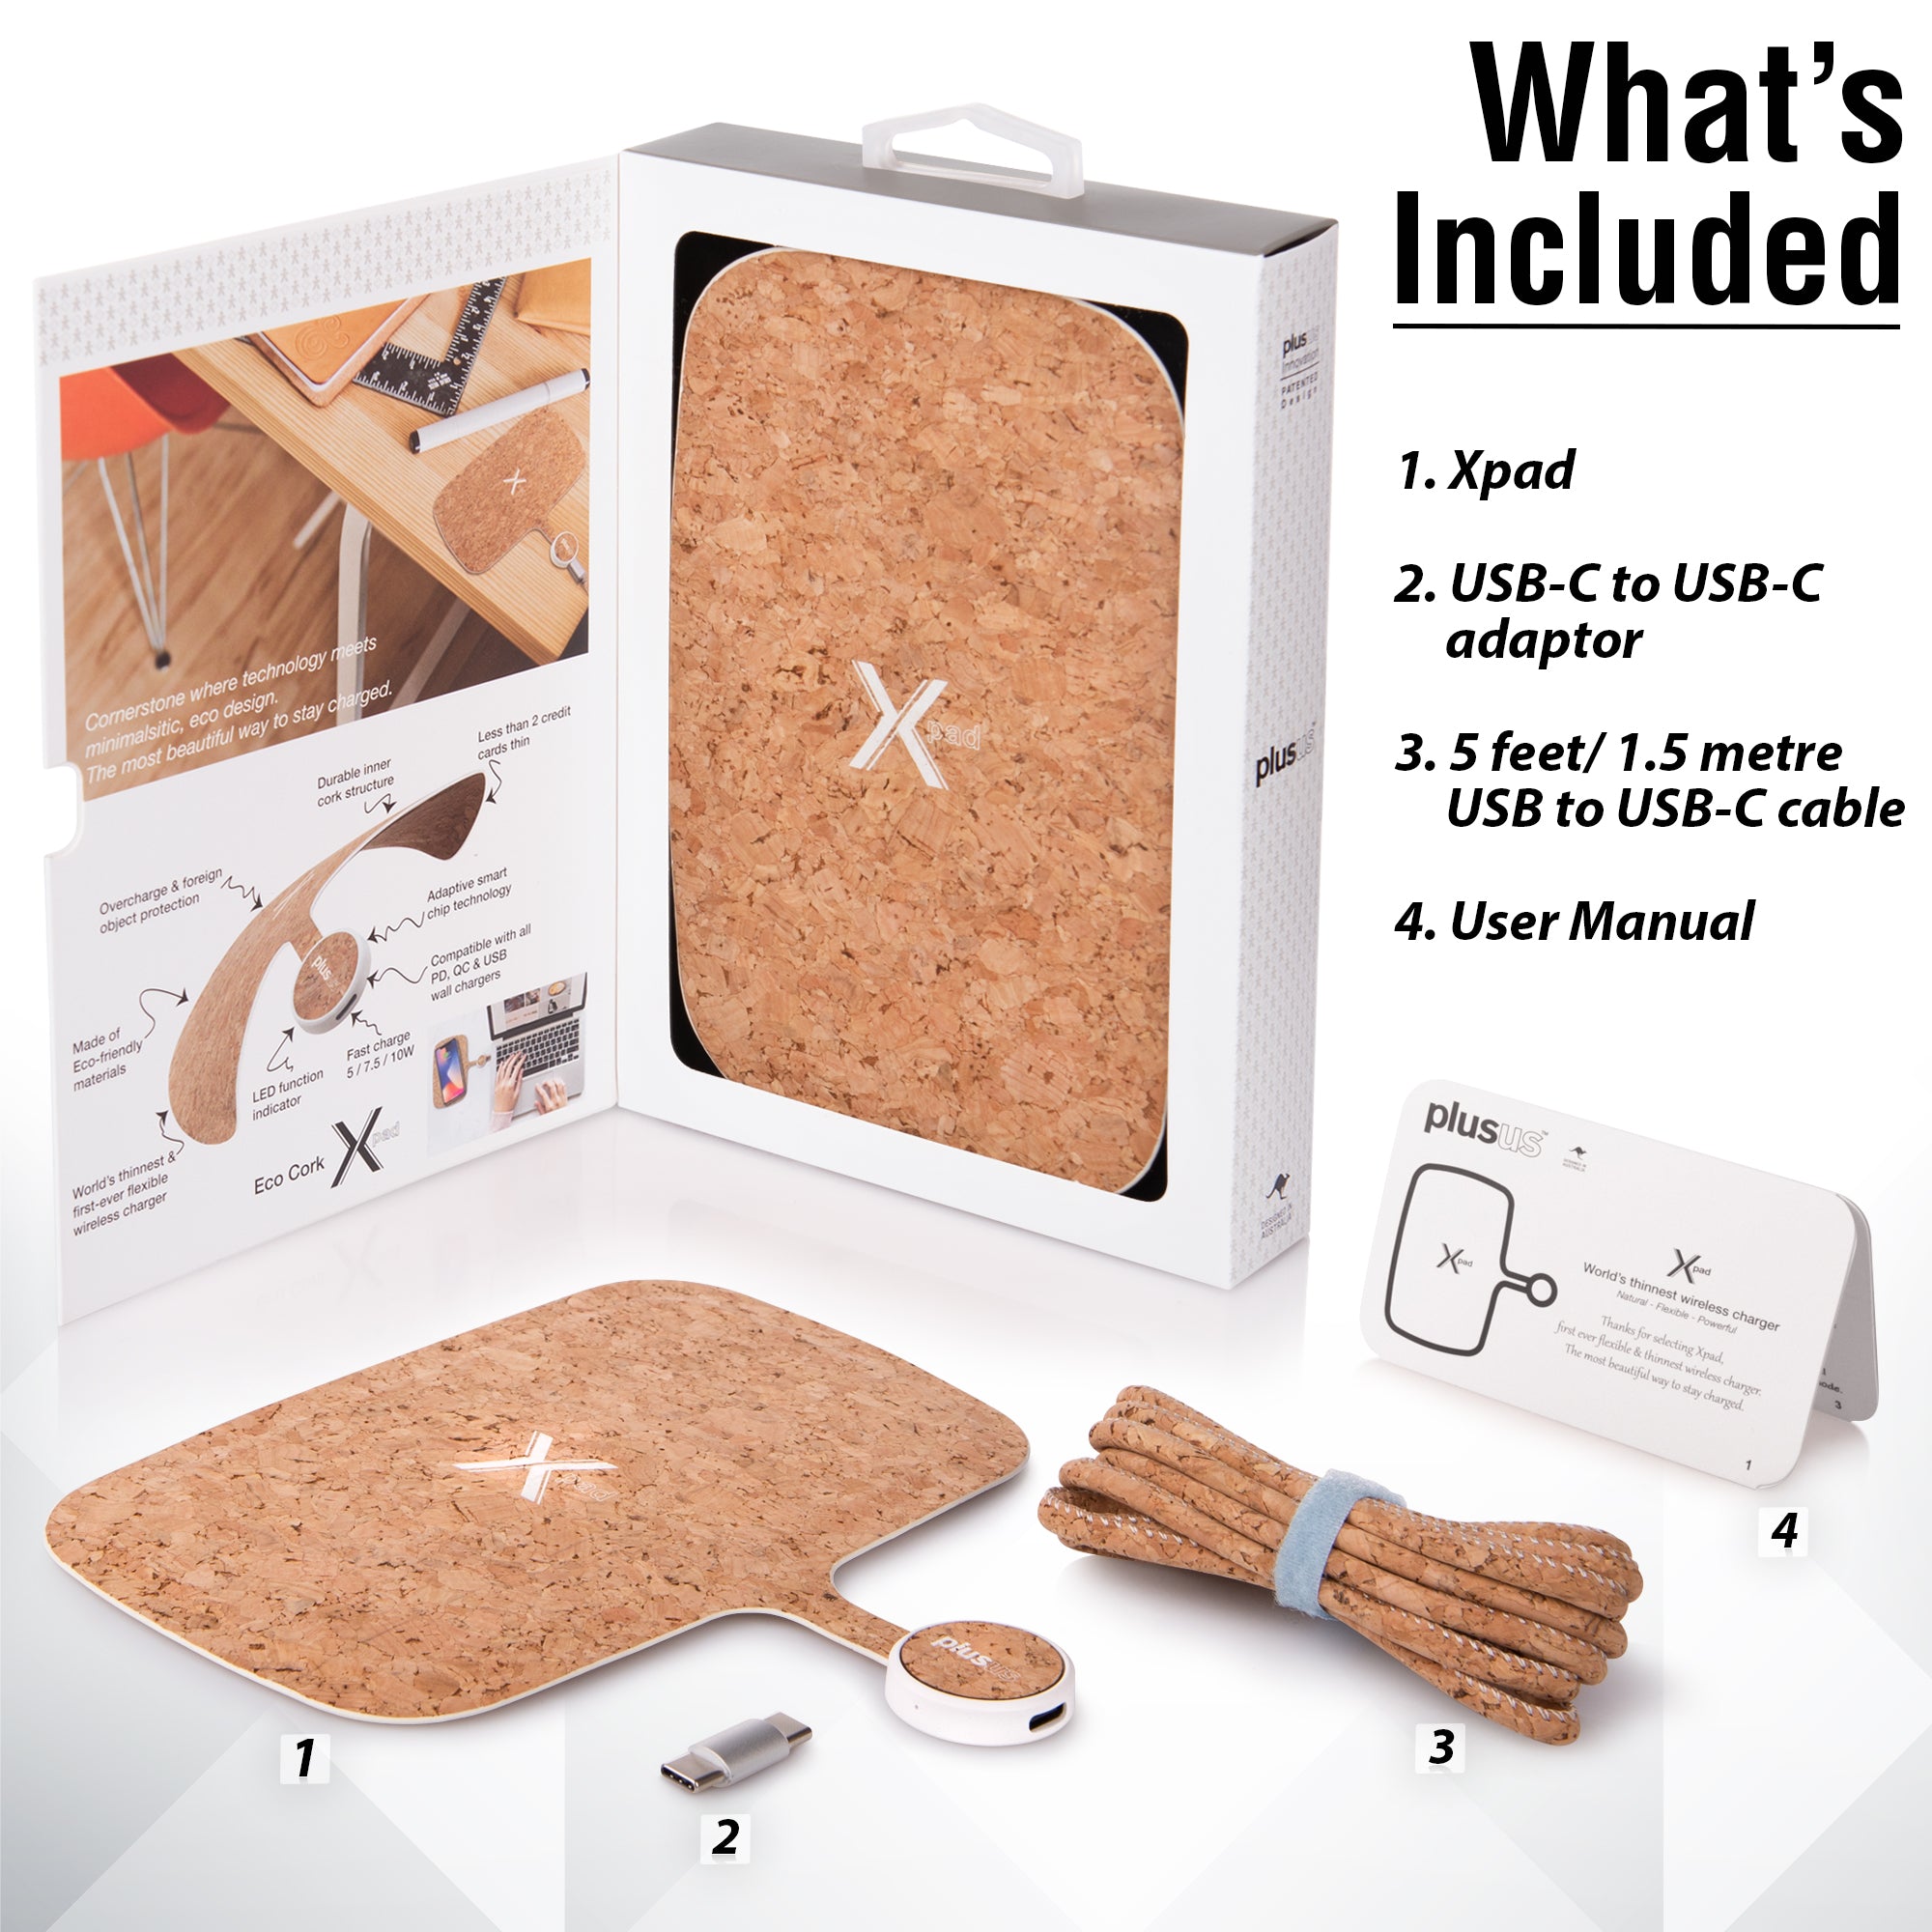 Xpad Wireless Charging Pad Eco Cork Plusus Com Au